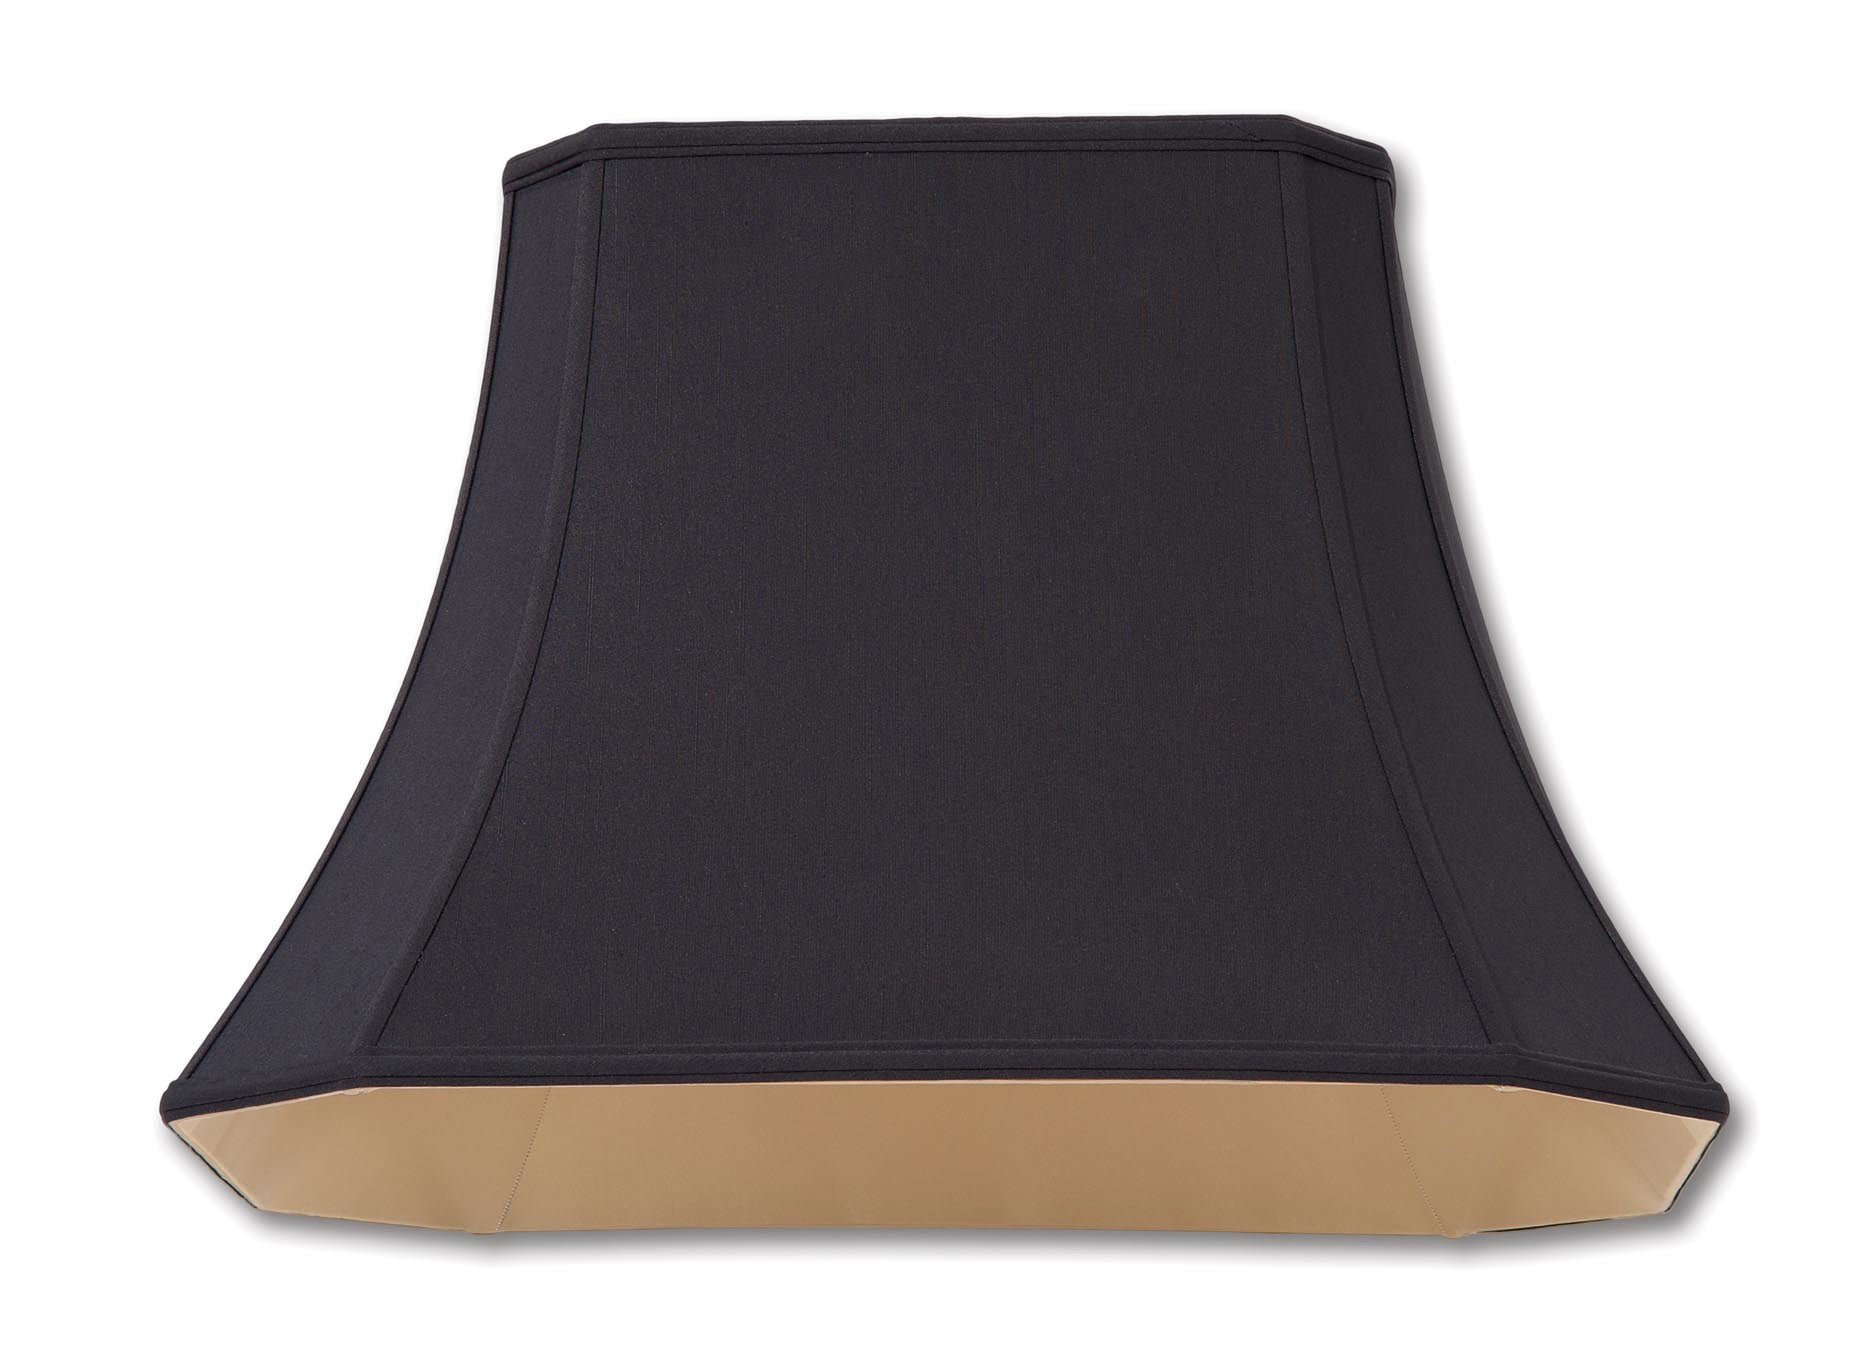 Cut Corner Rectangle Lamp Shades - Black Color, Tissue Shantung Material